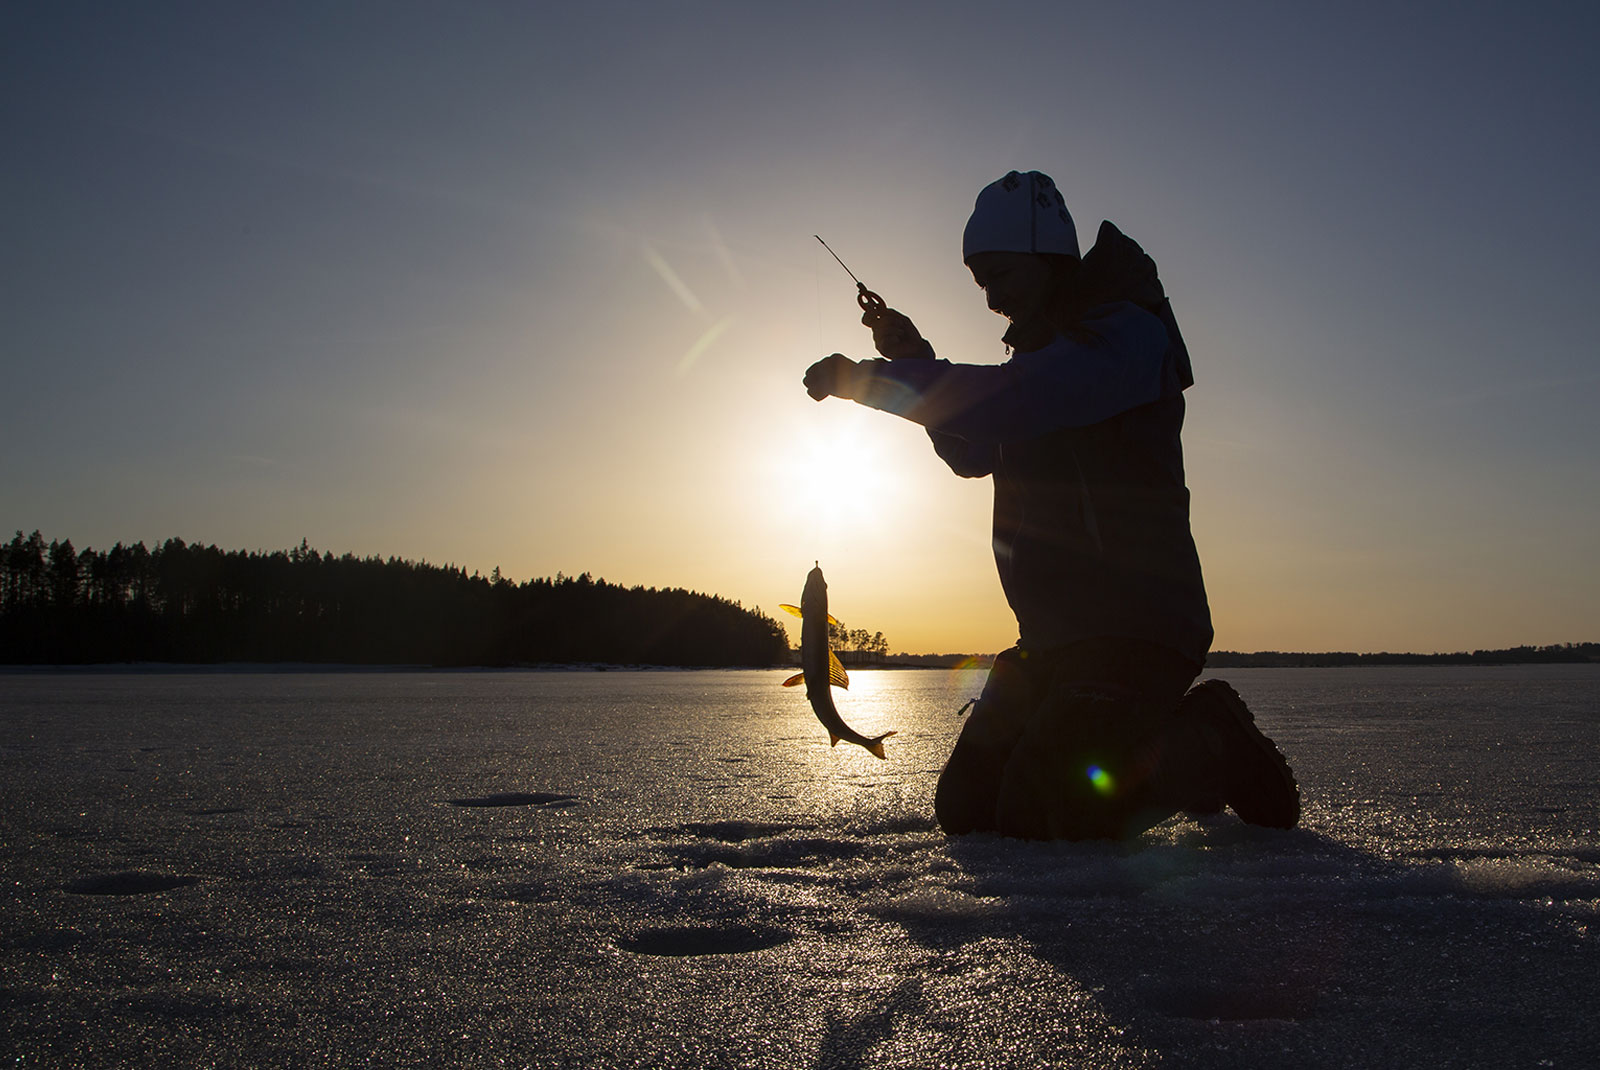 Ice fishing on a Minnesota lake